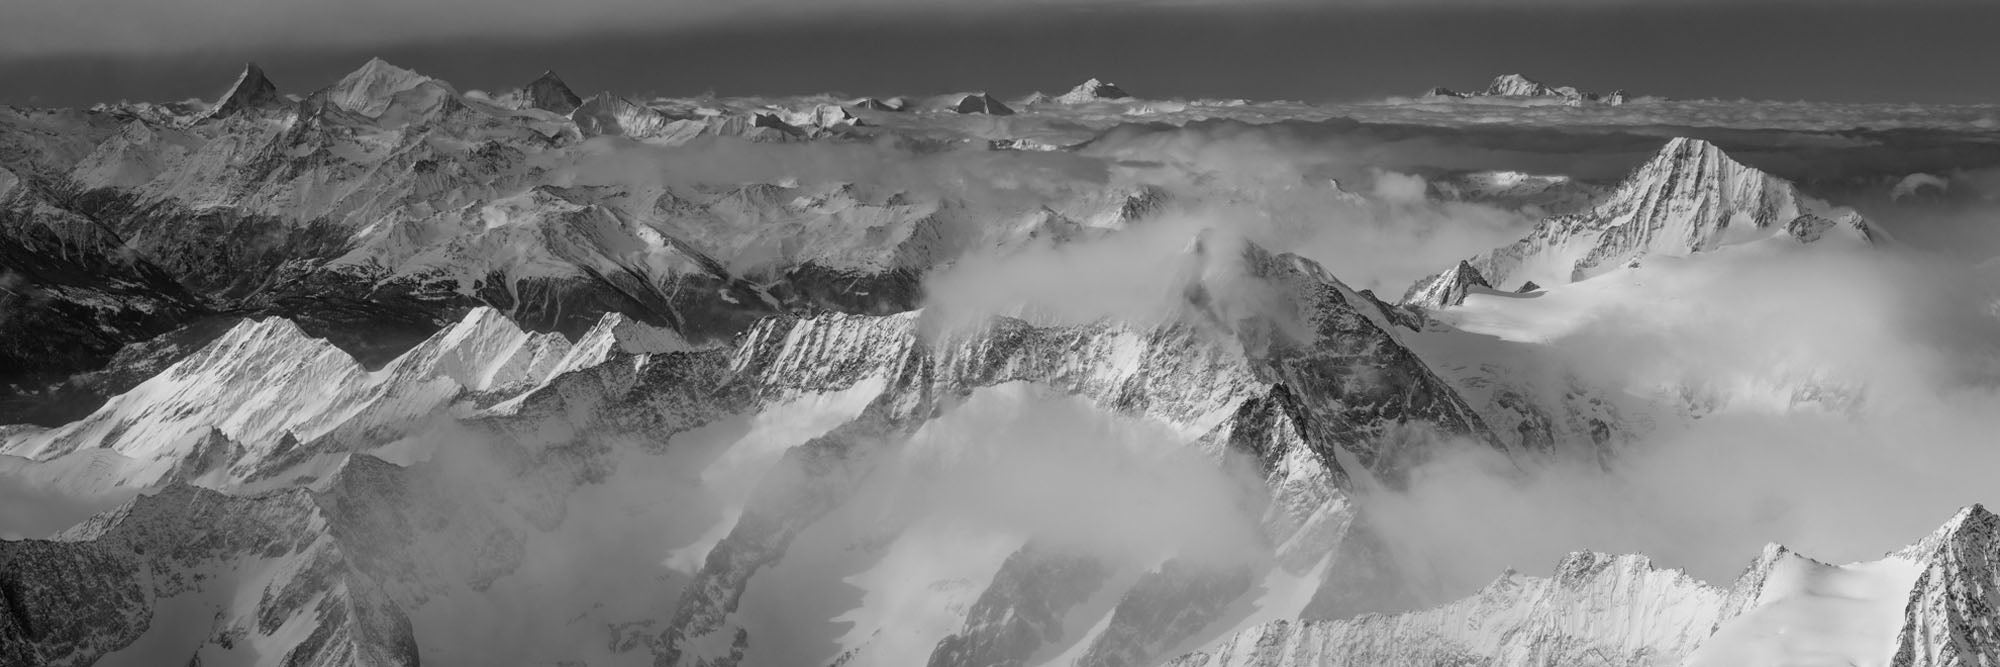 Les alpes vues des Bernese Alps, Switzerland No. 1 - Petra Gut Contemporary AG Thomas Crauwels